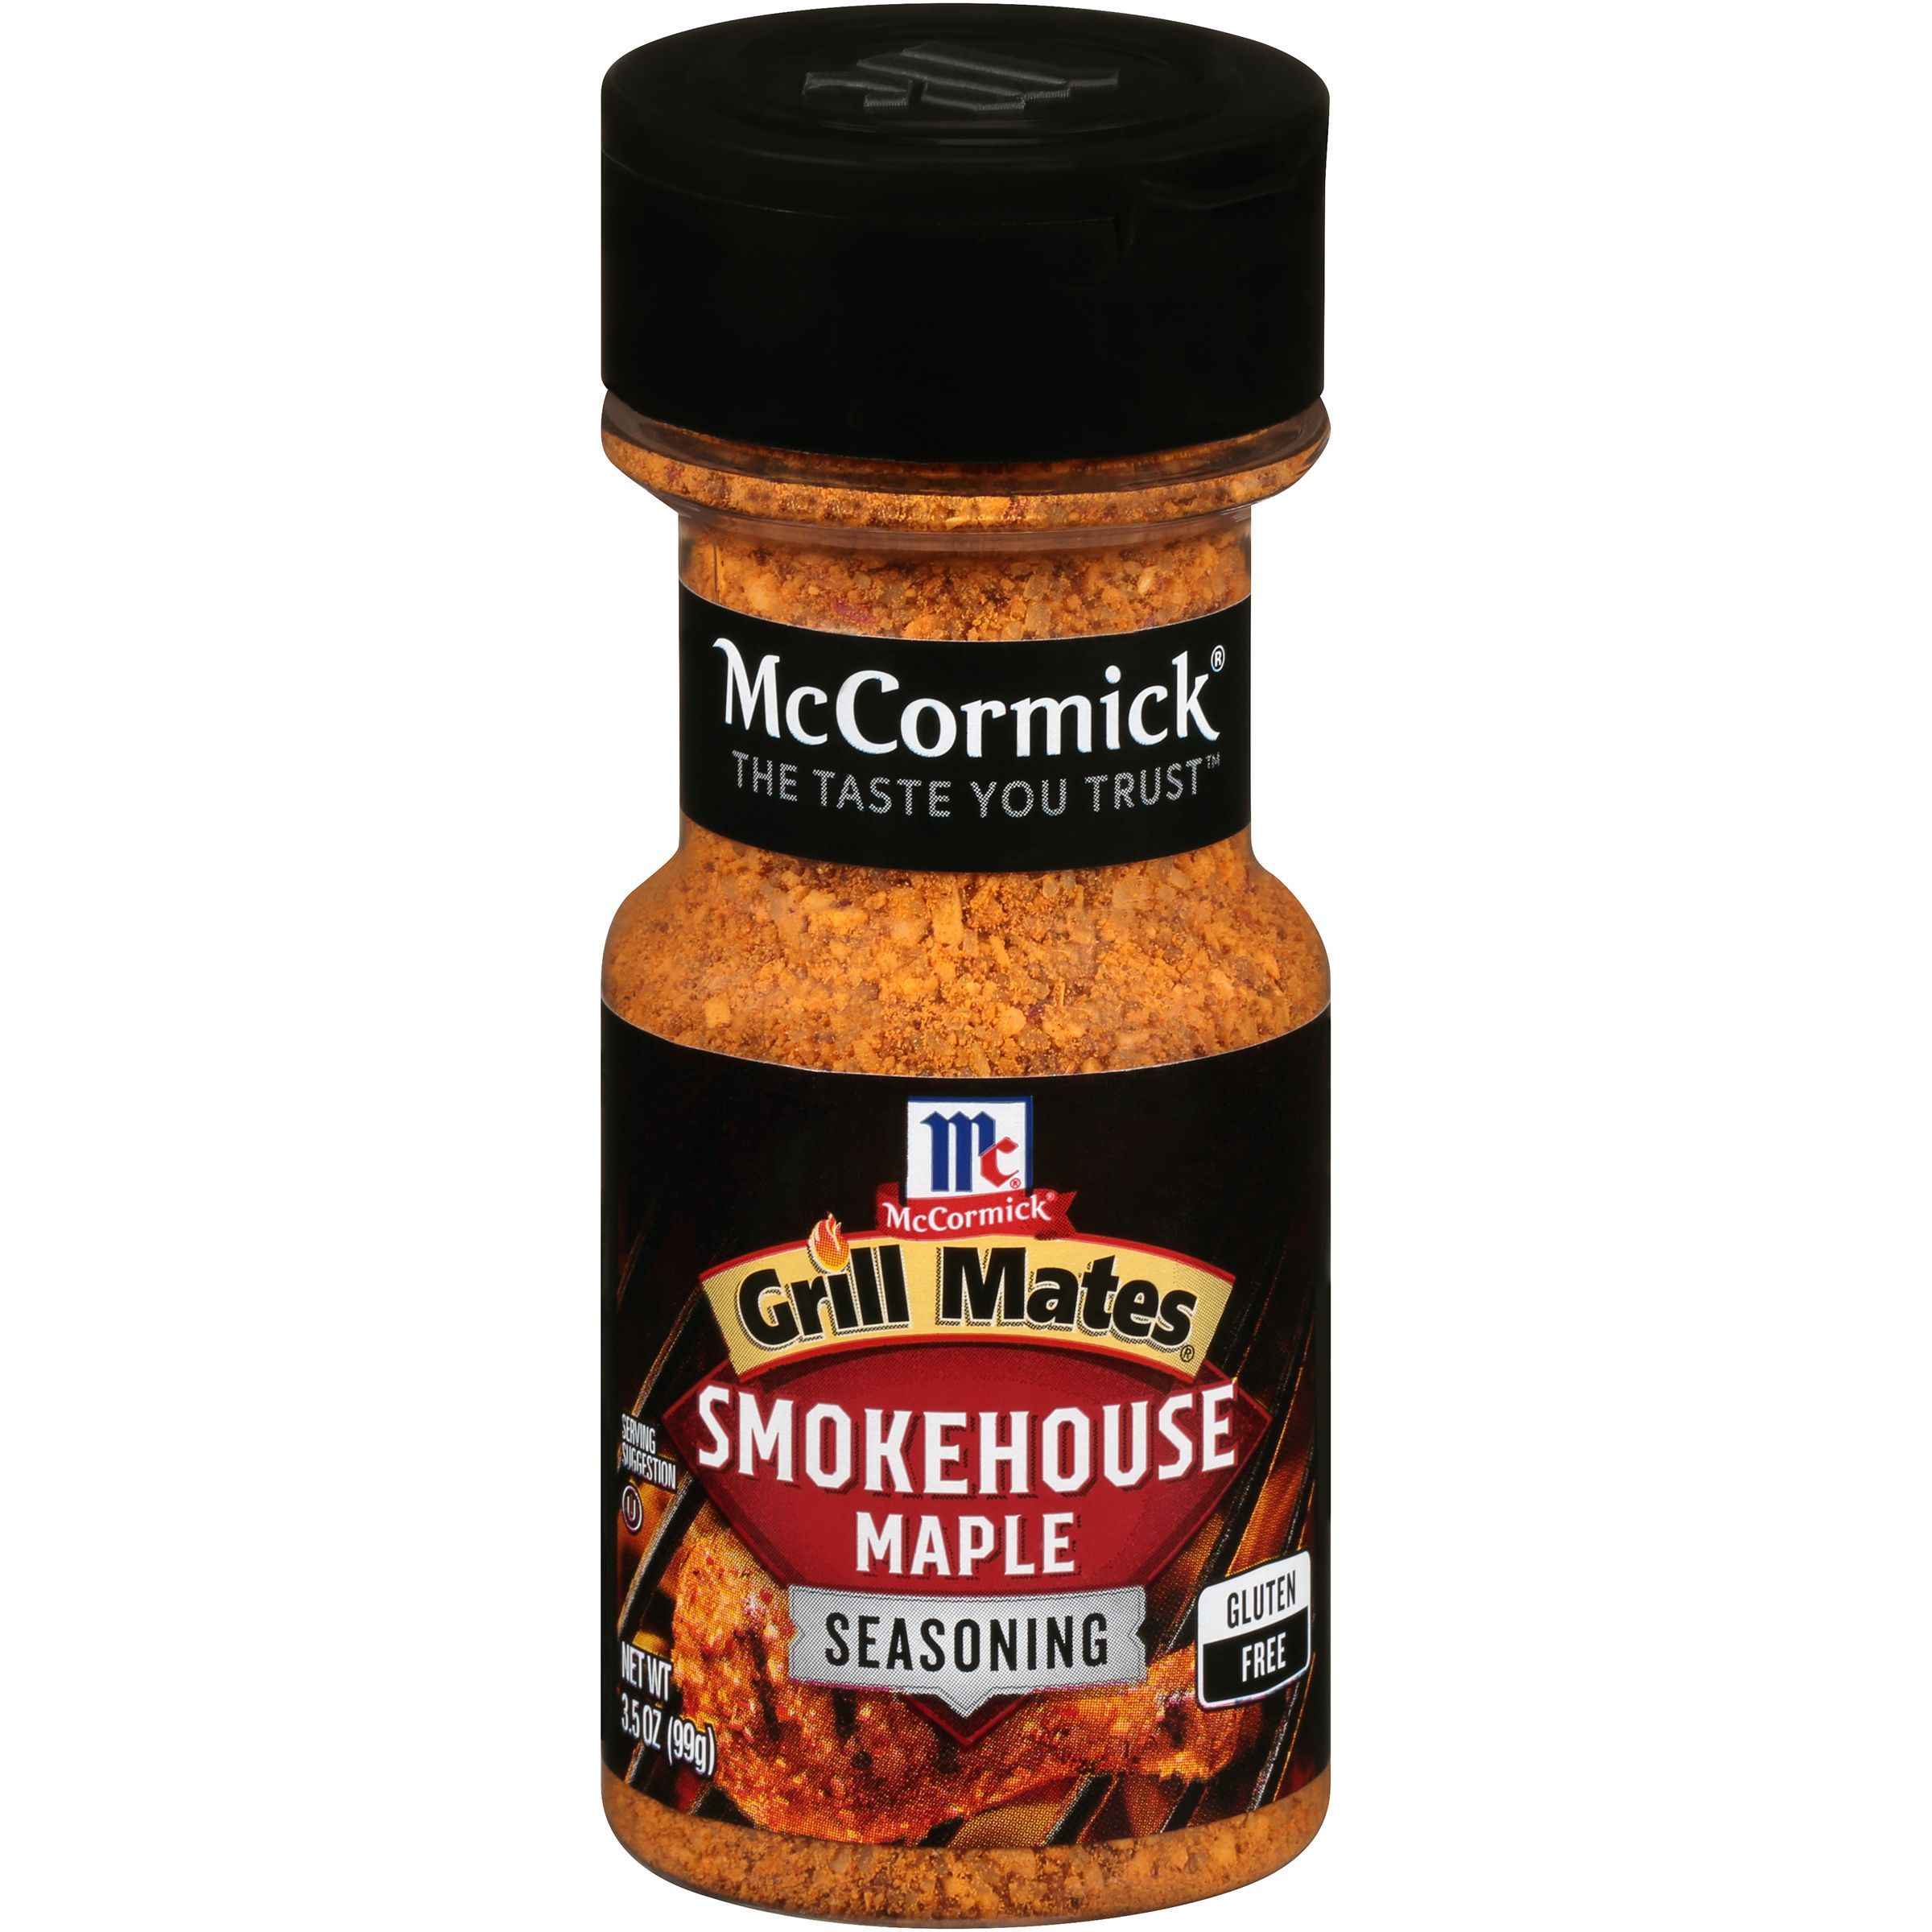 Smokehouse Maple Seasoning